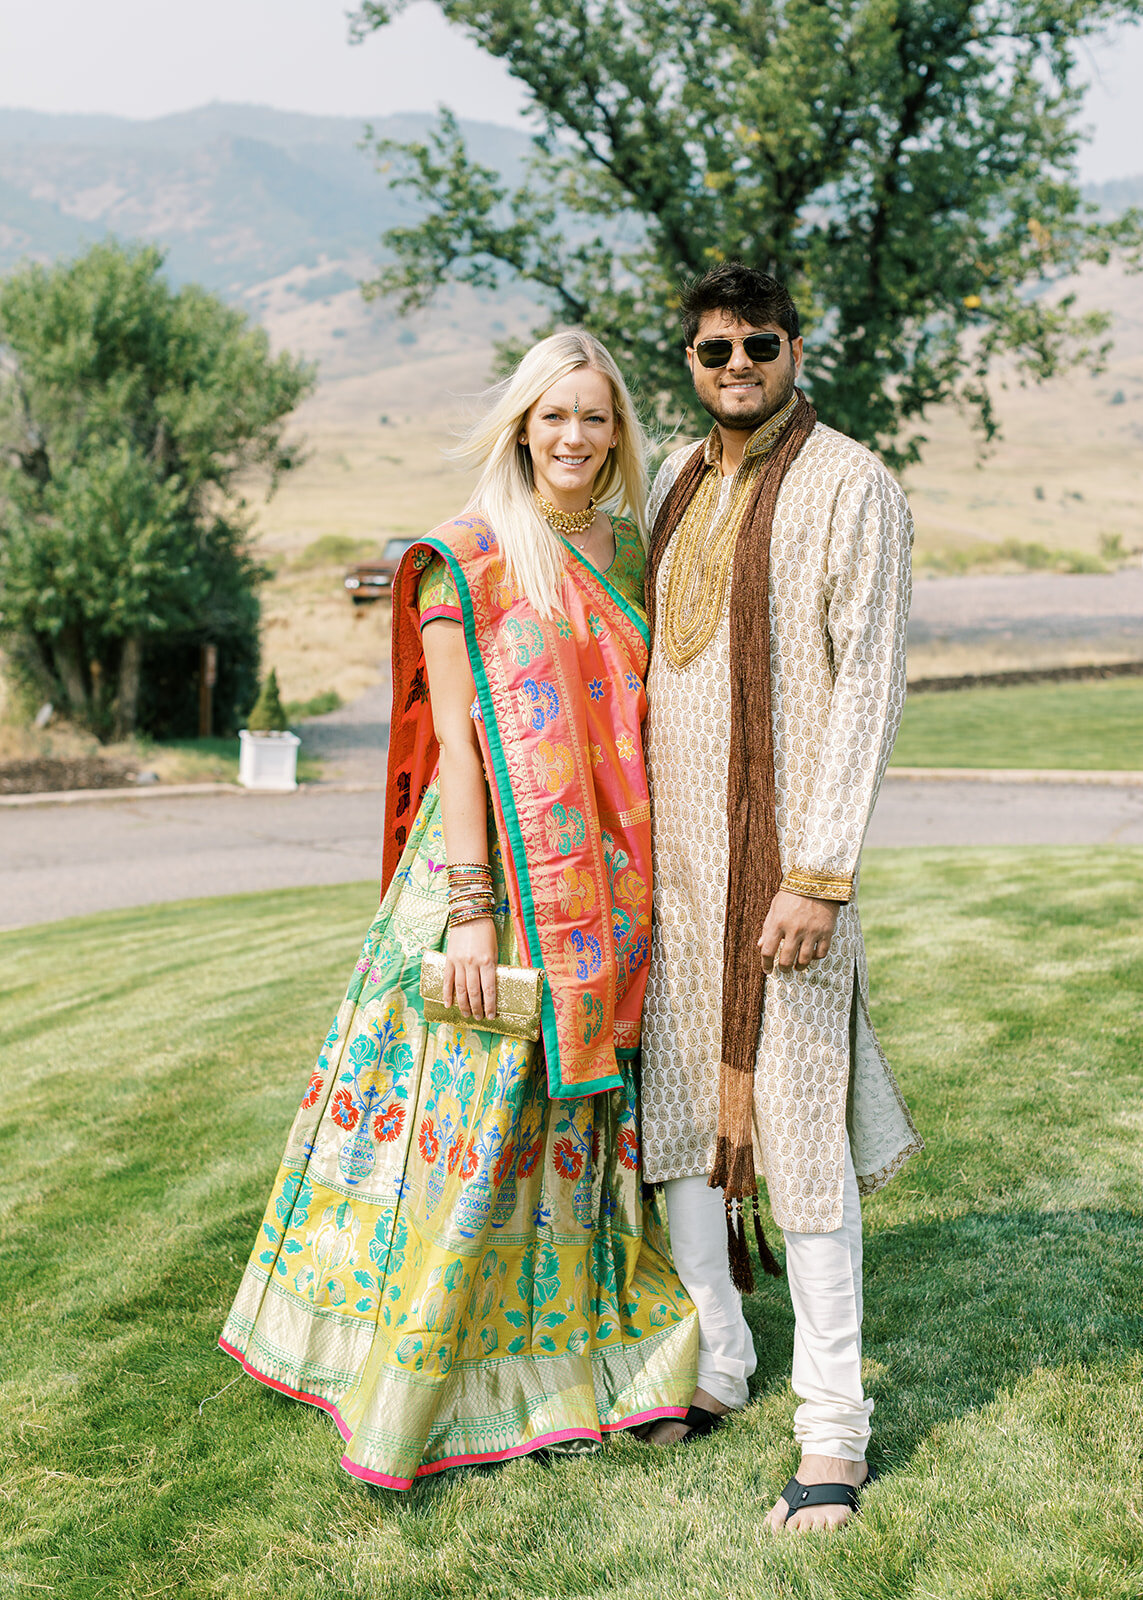 Wedding guests at a South Asian Fusion wedding